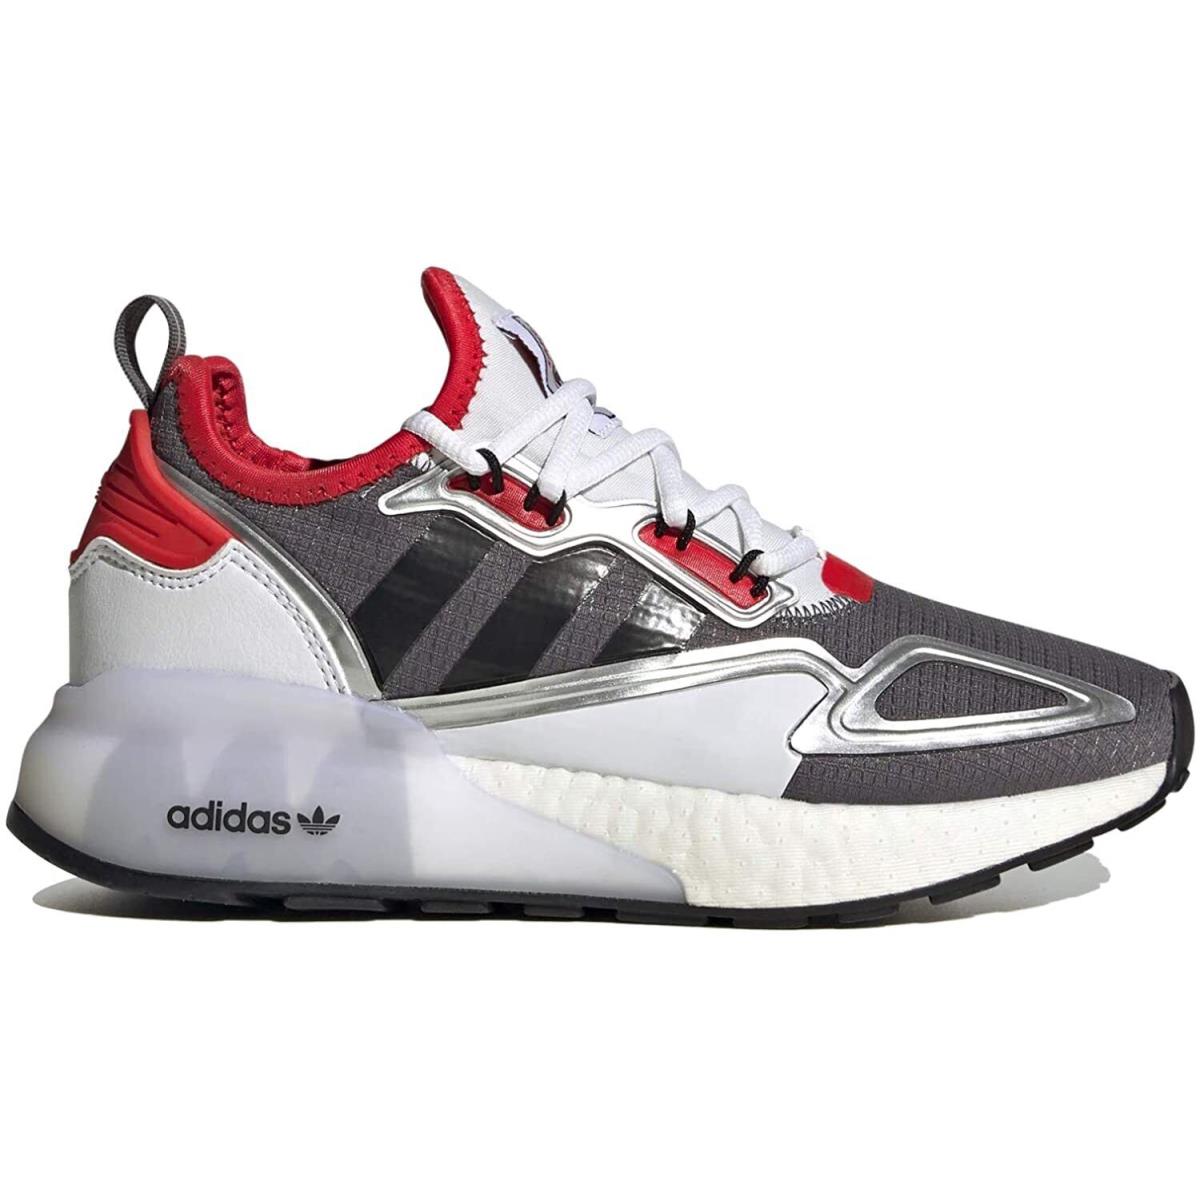 Adidas ZX 2K Boost J Running Big Kids Shoe FX8774 Size 5.5 Youth